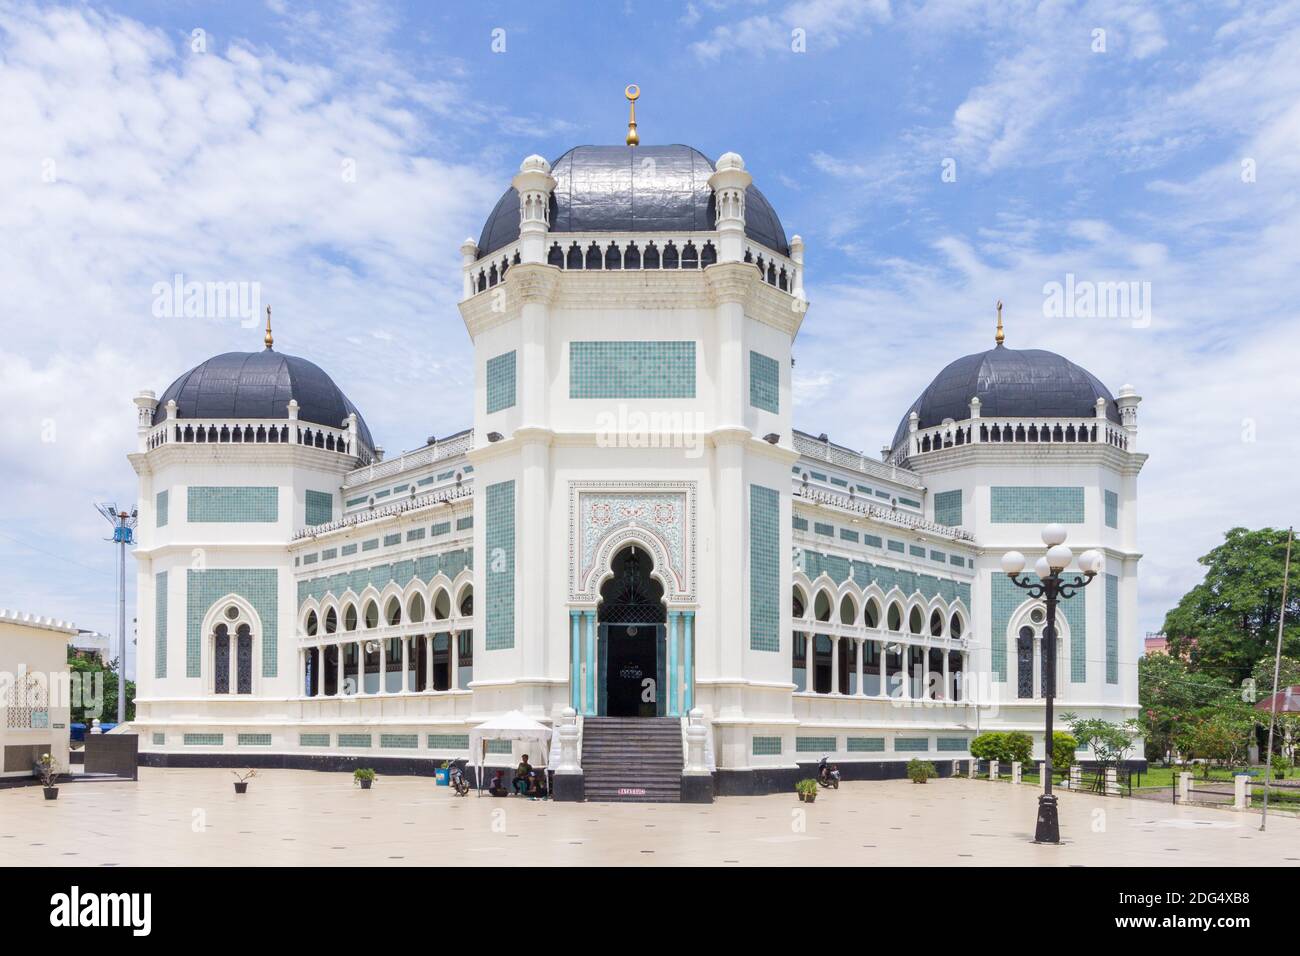 The Grand Mosque of Medan in Sumatra, Indonesia Stock Photo